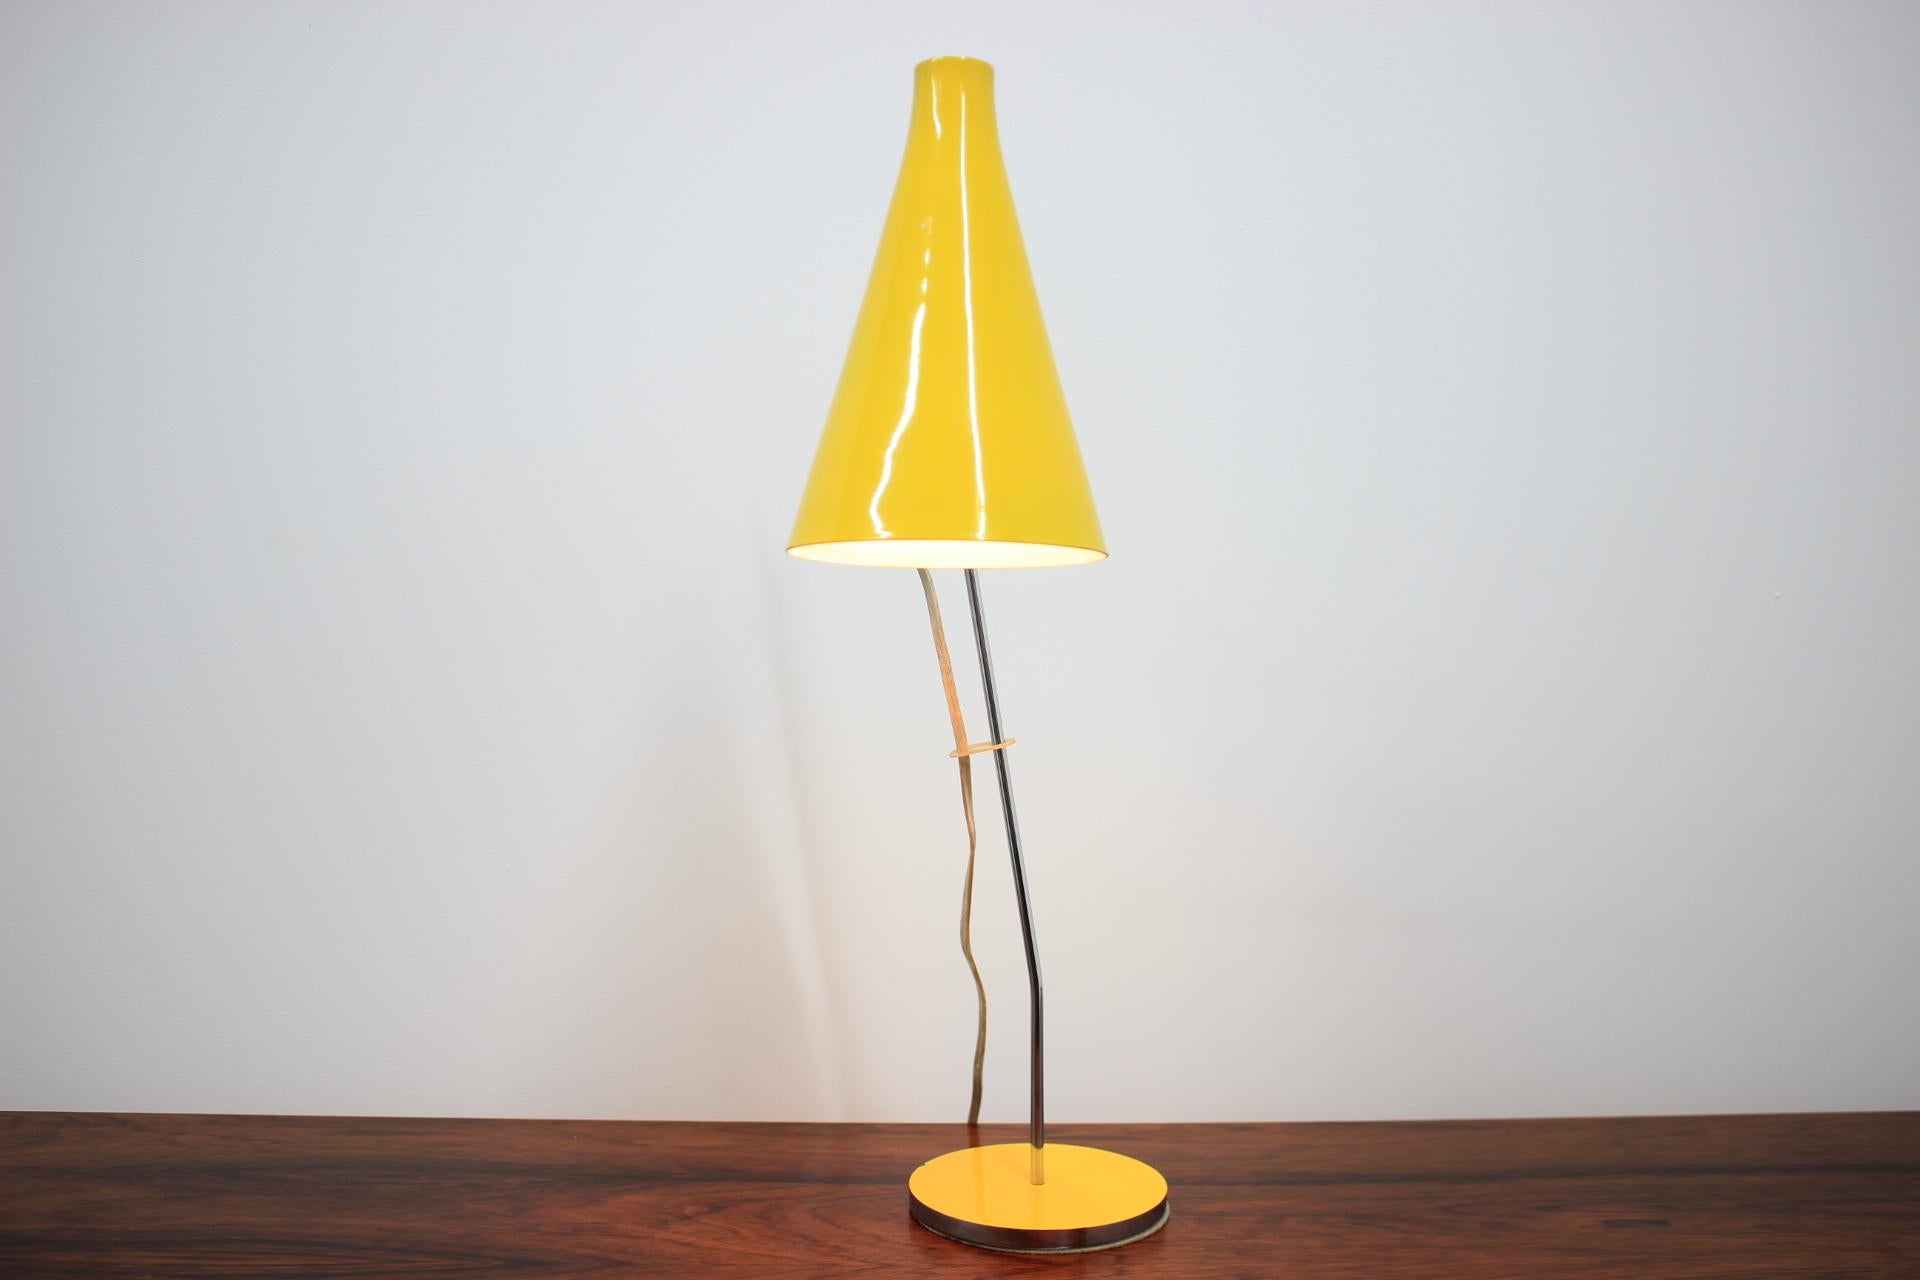 Midcentury table lamp Lidokov, Josef Hurka, 1960s, adjustable
Very nice style of lighting.